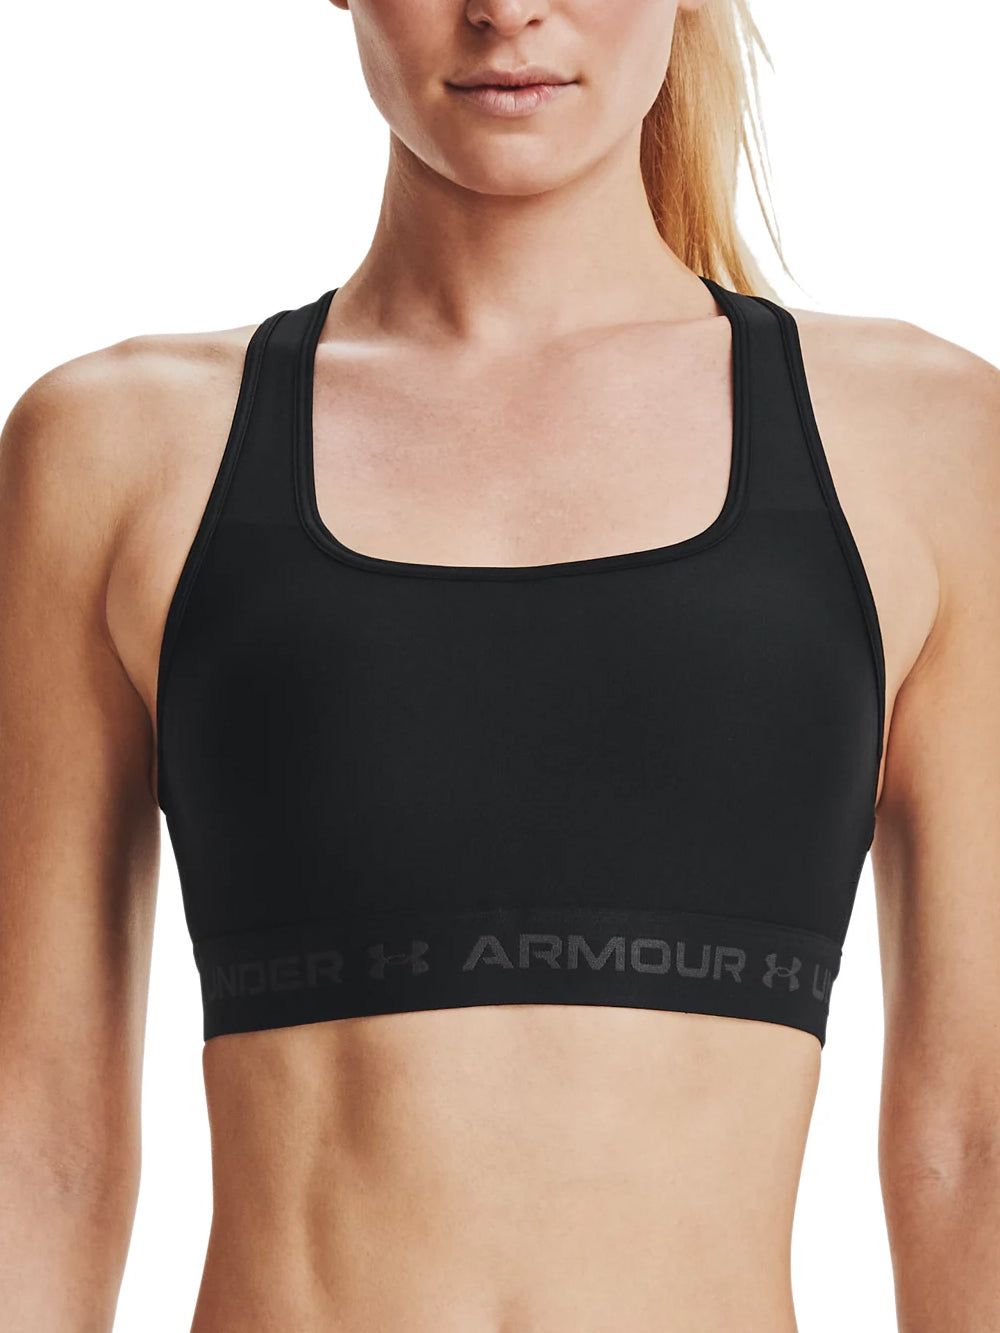 Women's armour mid crossback sports bra